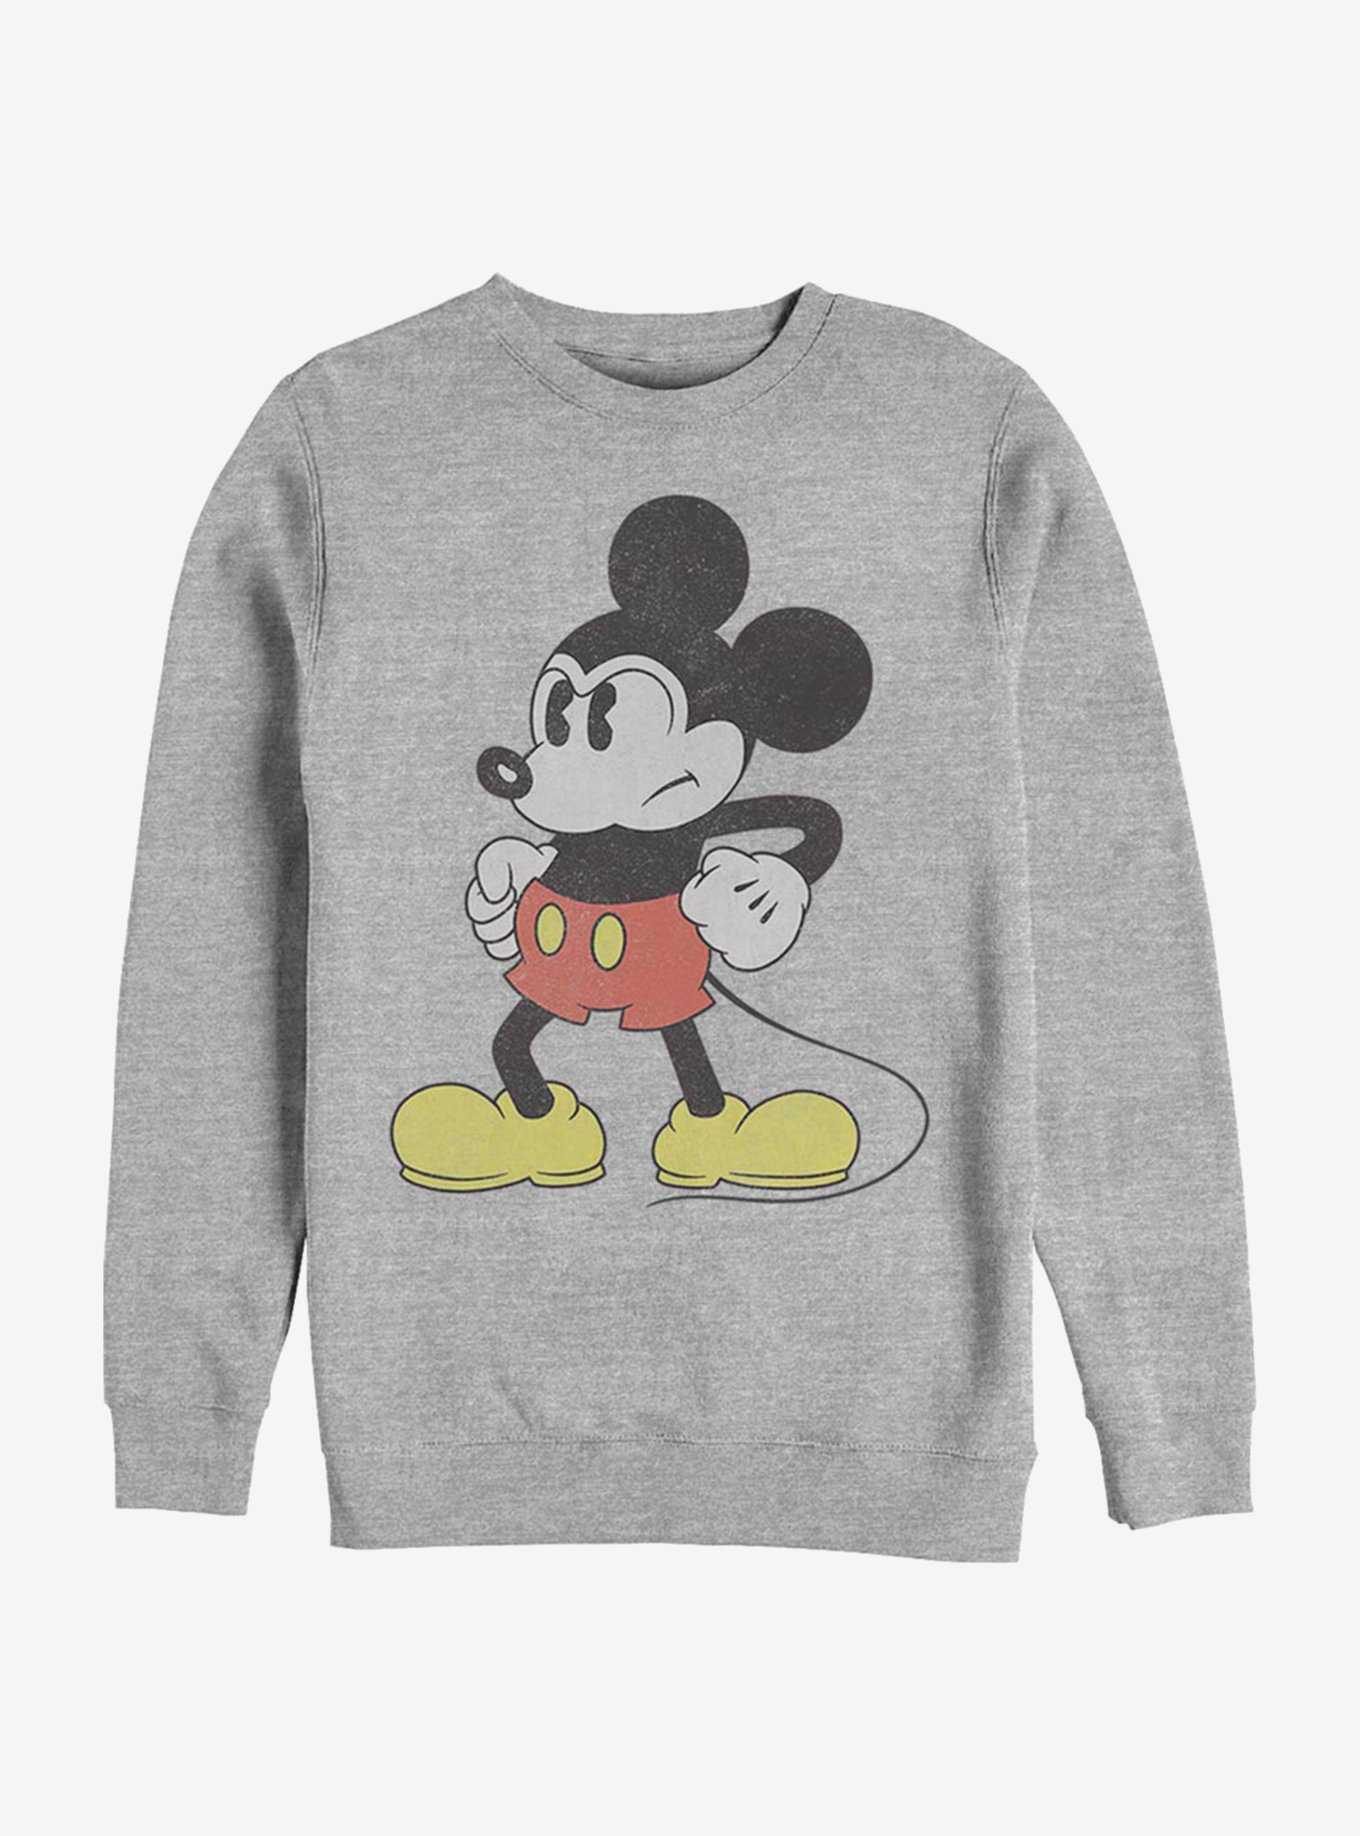 Disney Mickey Mouse Mightiest Mouse Crew Sweatshirt, , hi-res